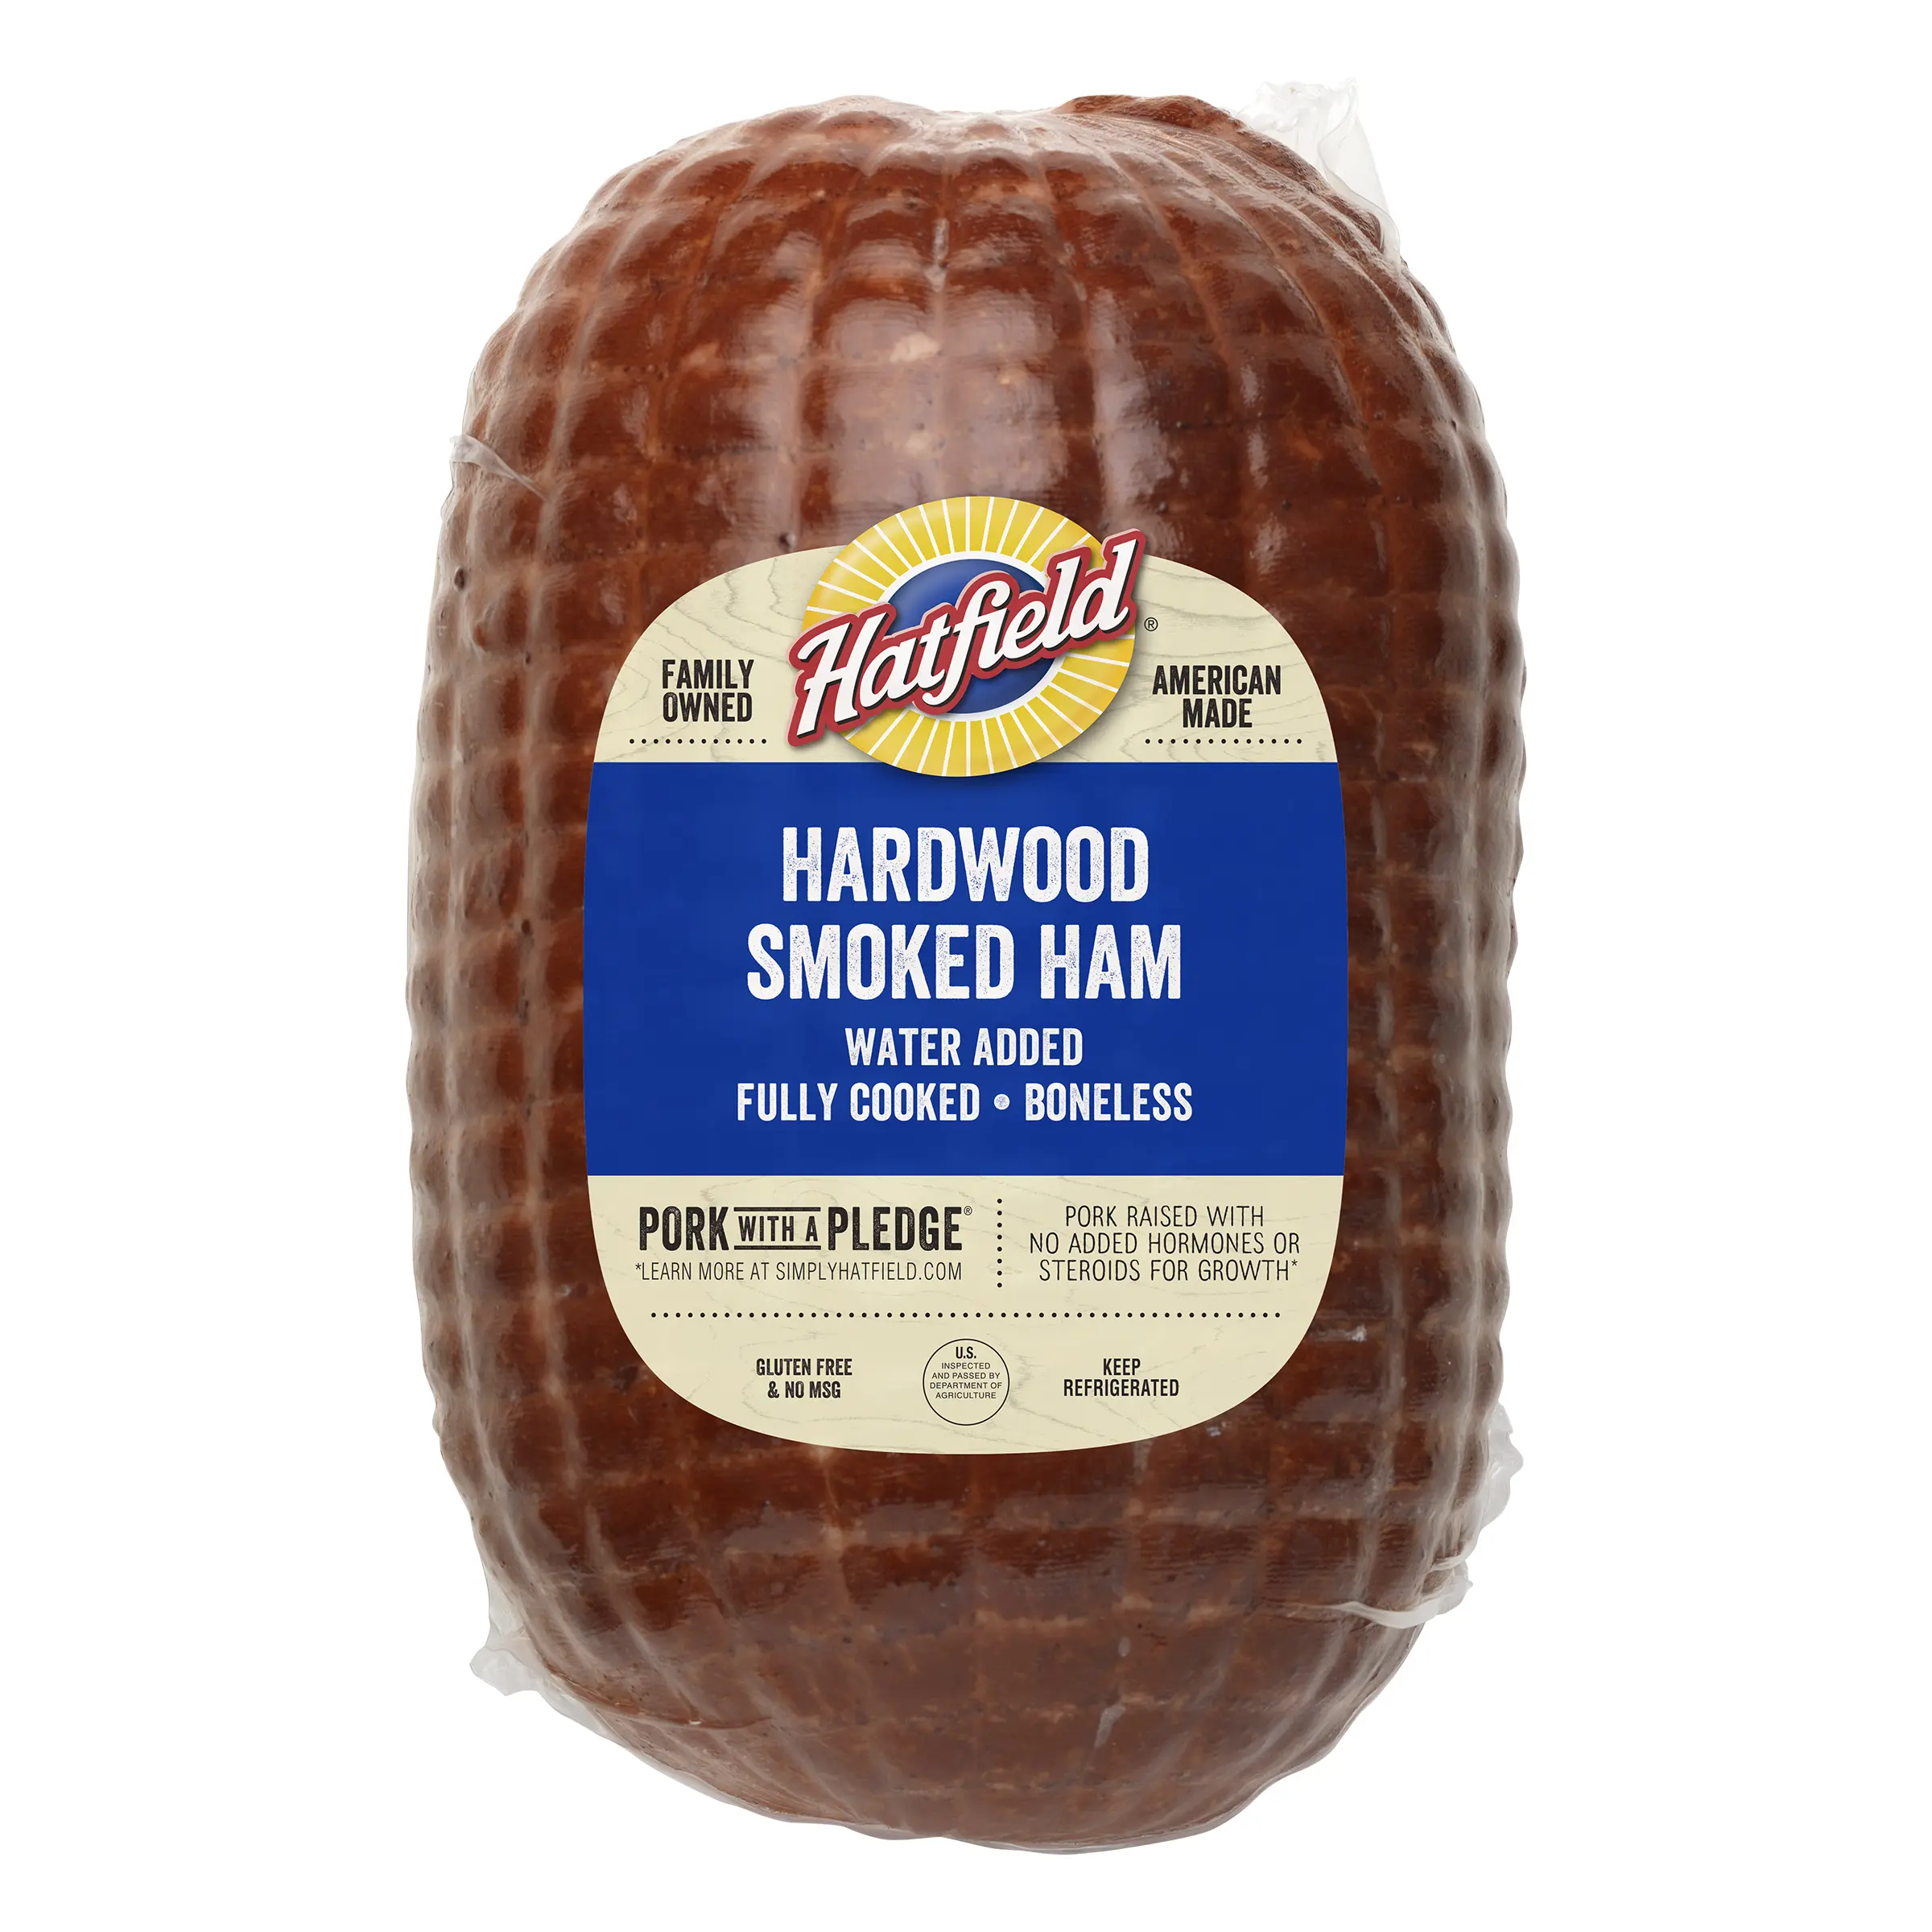 hardwood smoked ham - Is a Smithfield hardwood smoked ham fully cooked